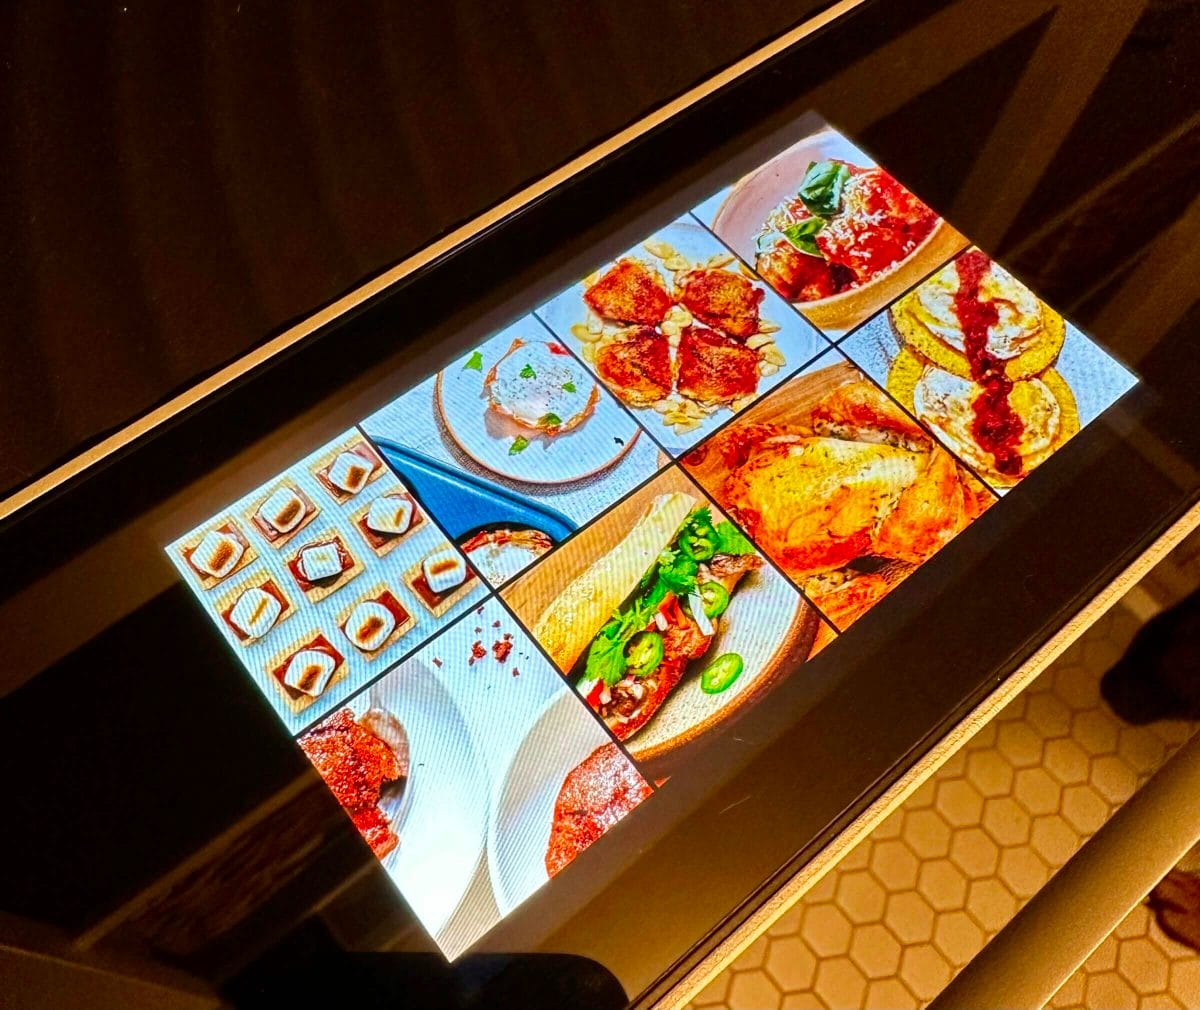 The Brava oven touchscreen.